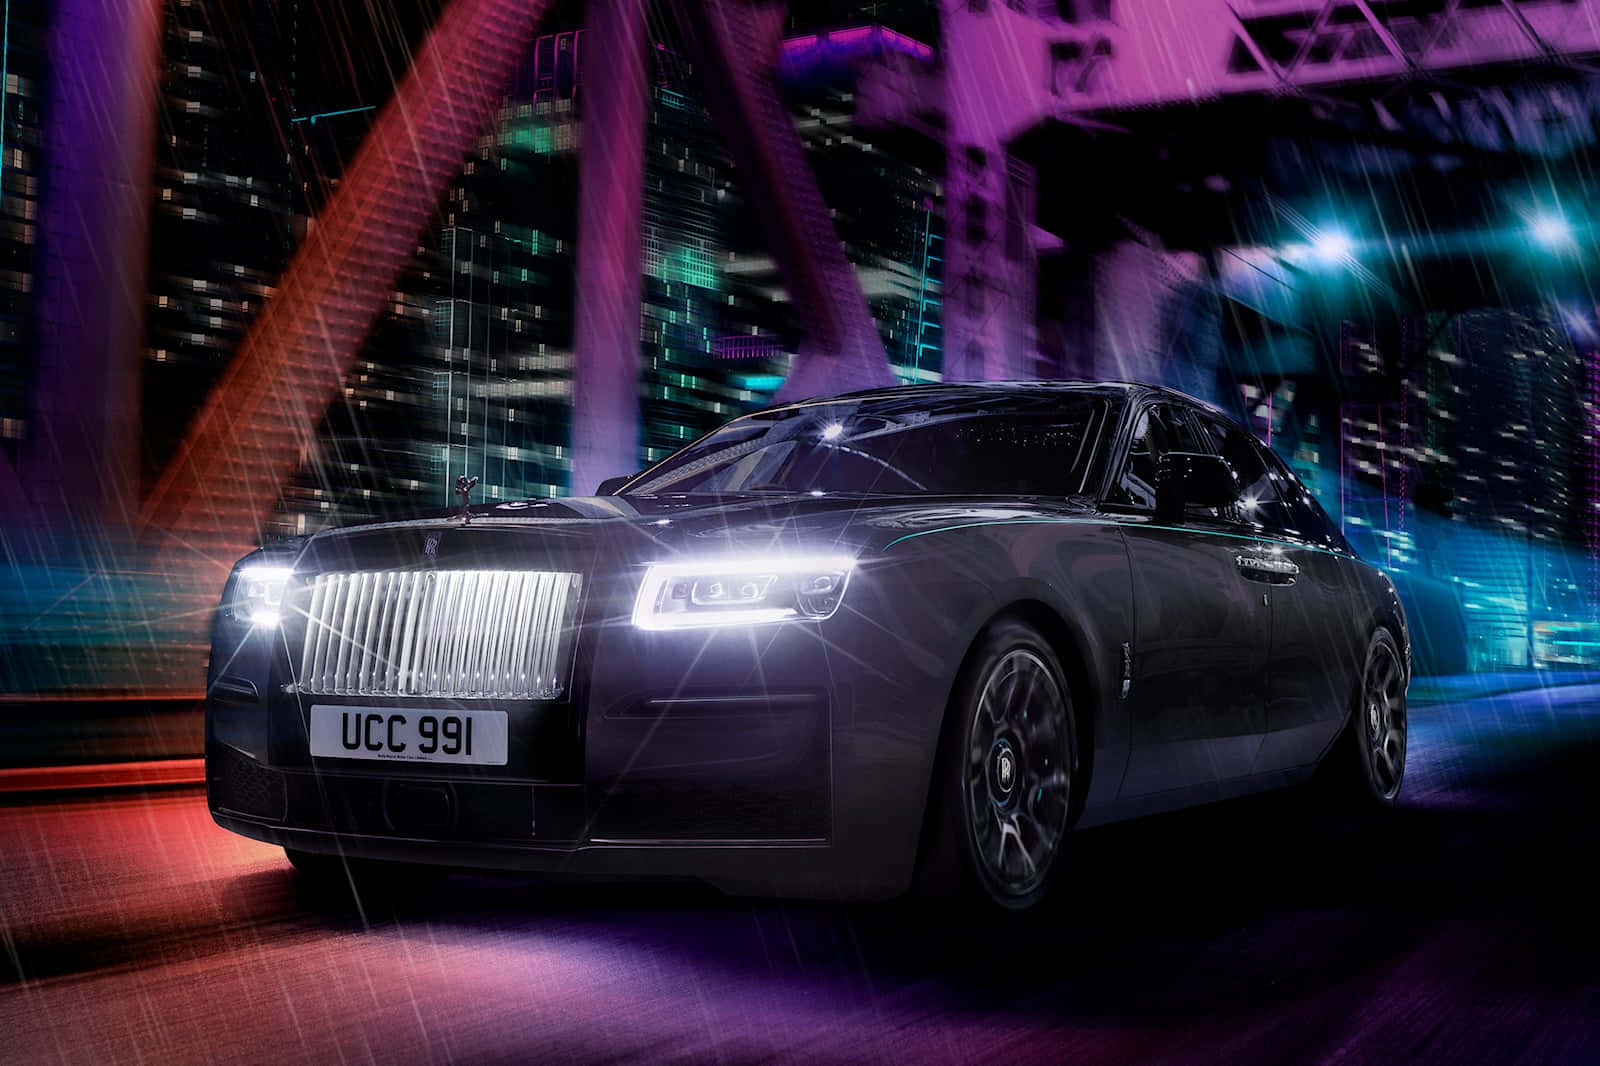 Luxurious Rolls Royce in Elegant Setting